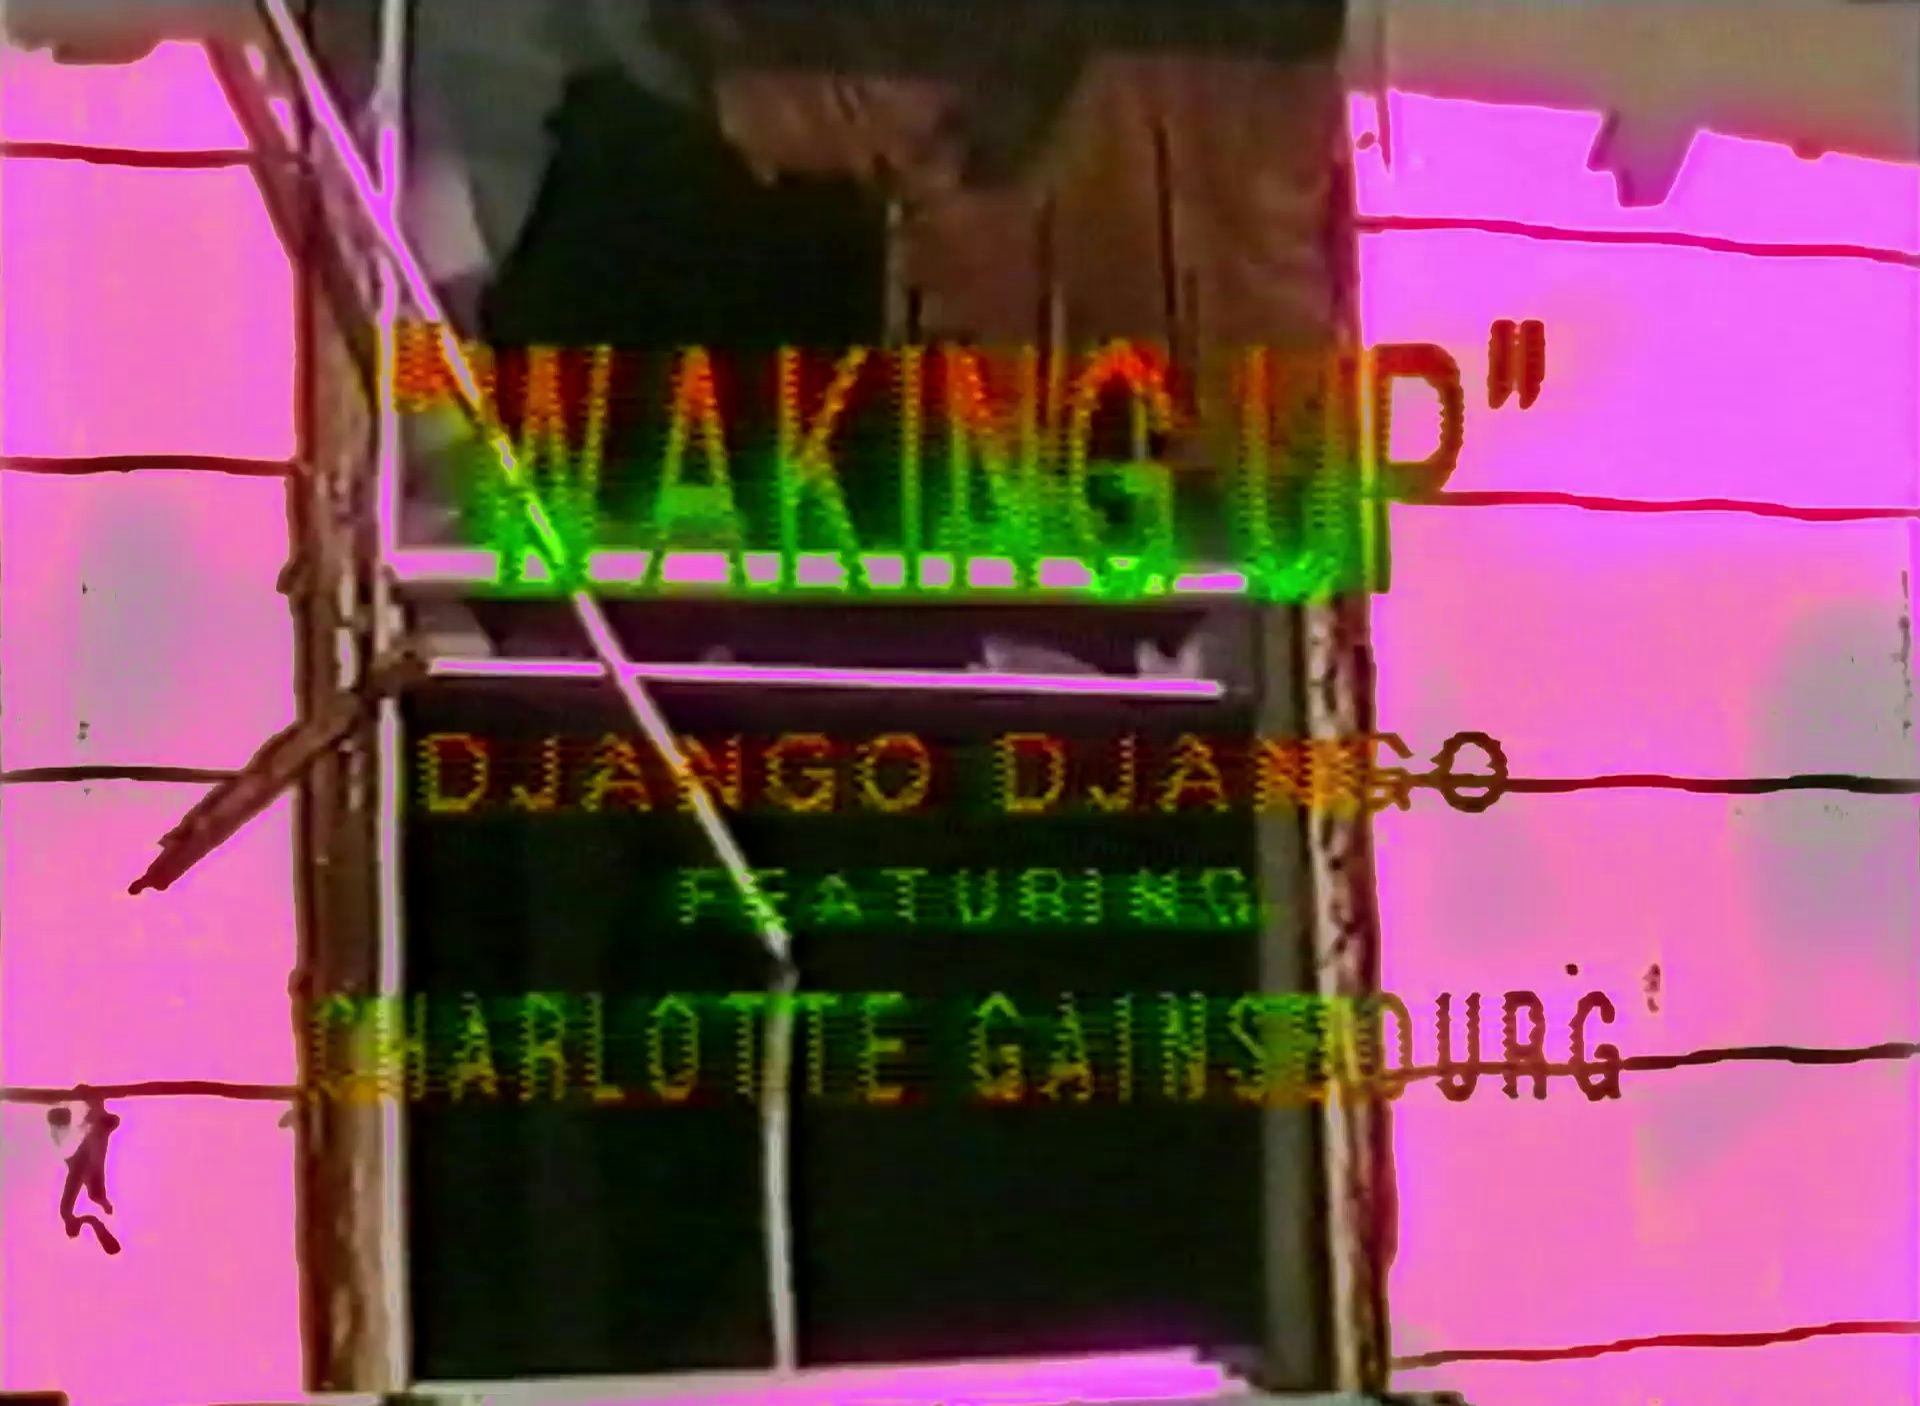 Django Django “Waking Up” Official Music Video clip featuring the title card